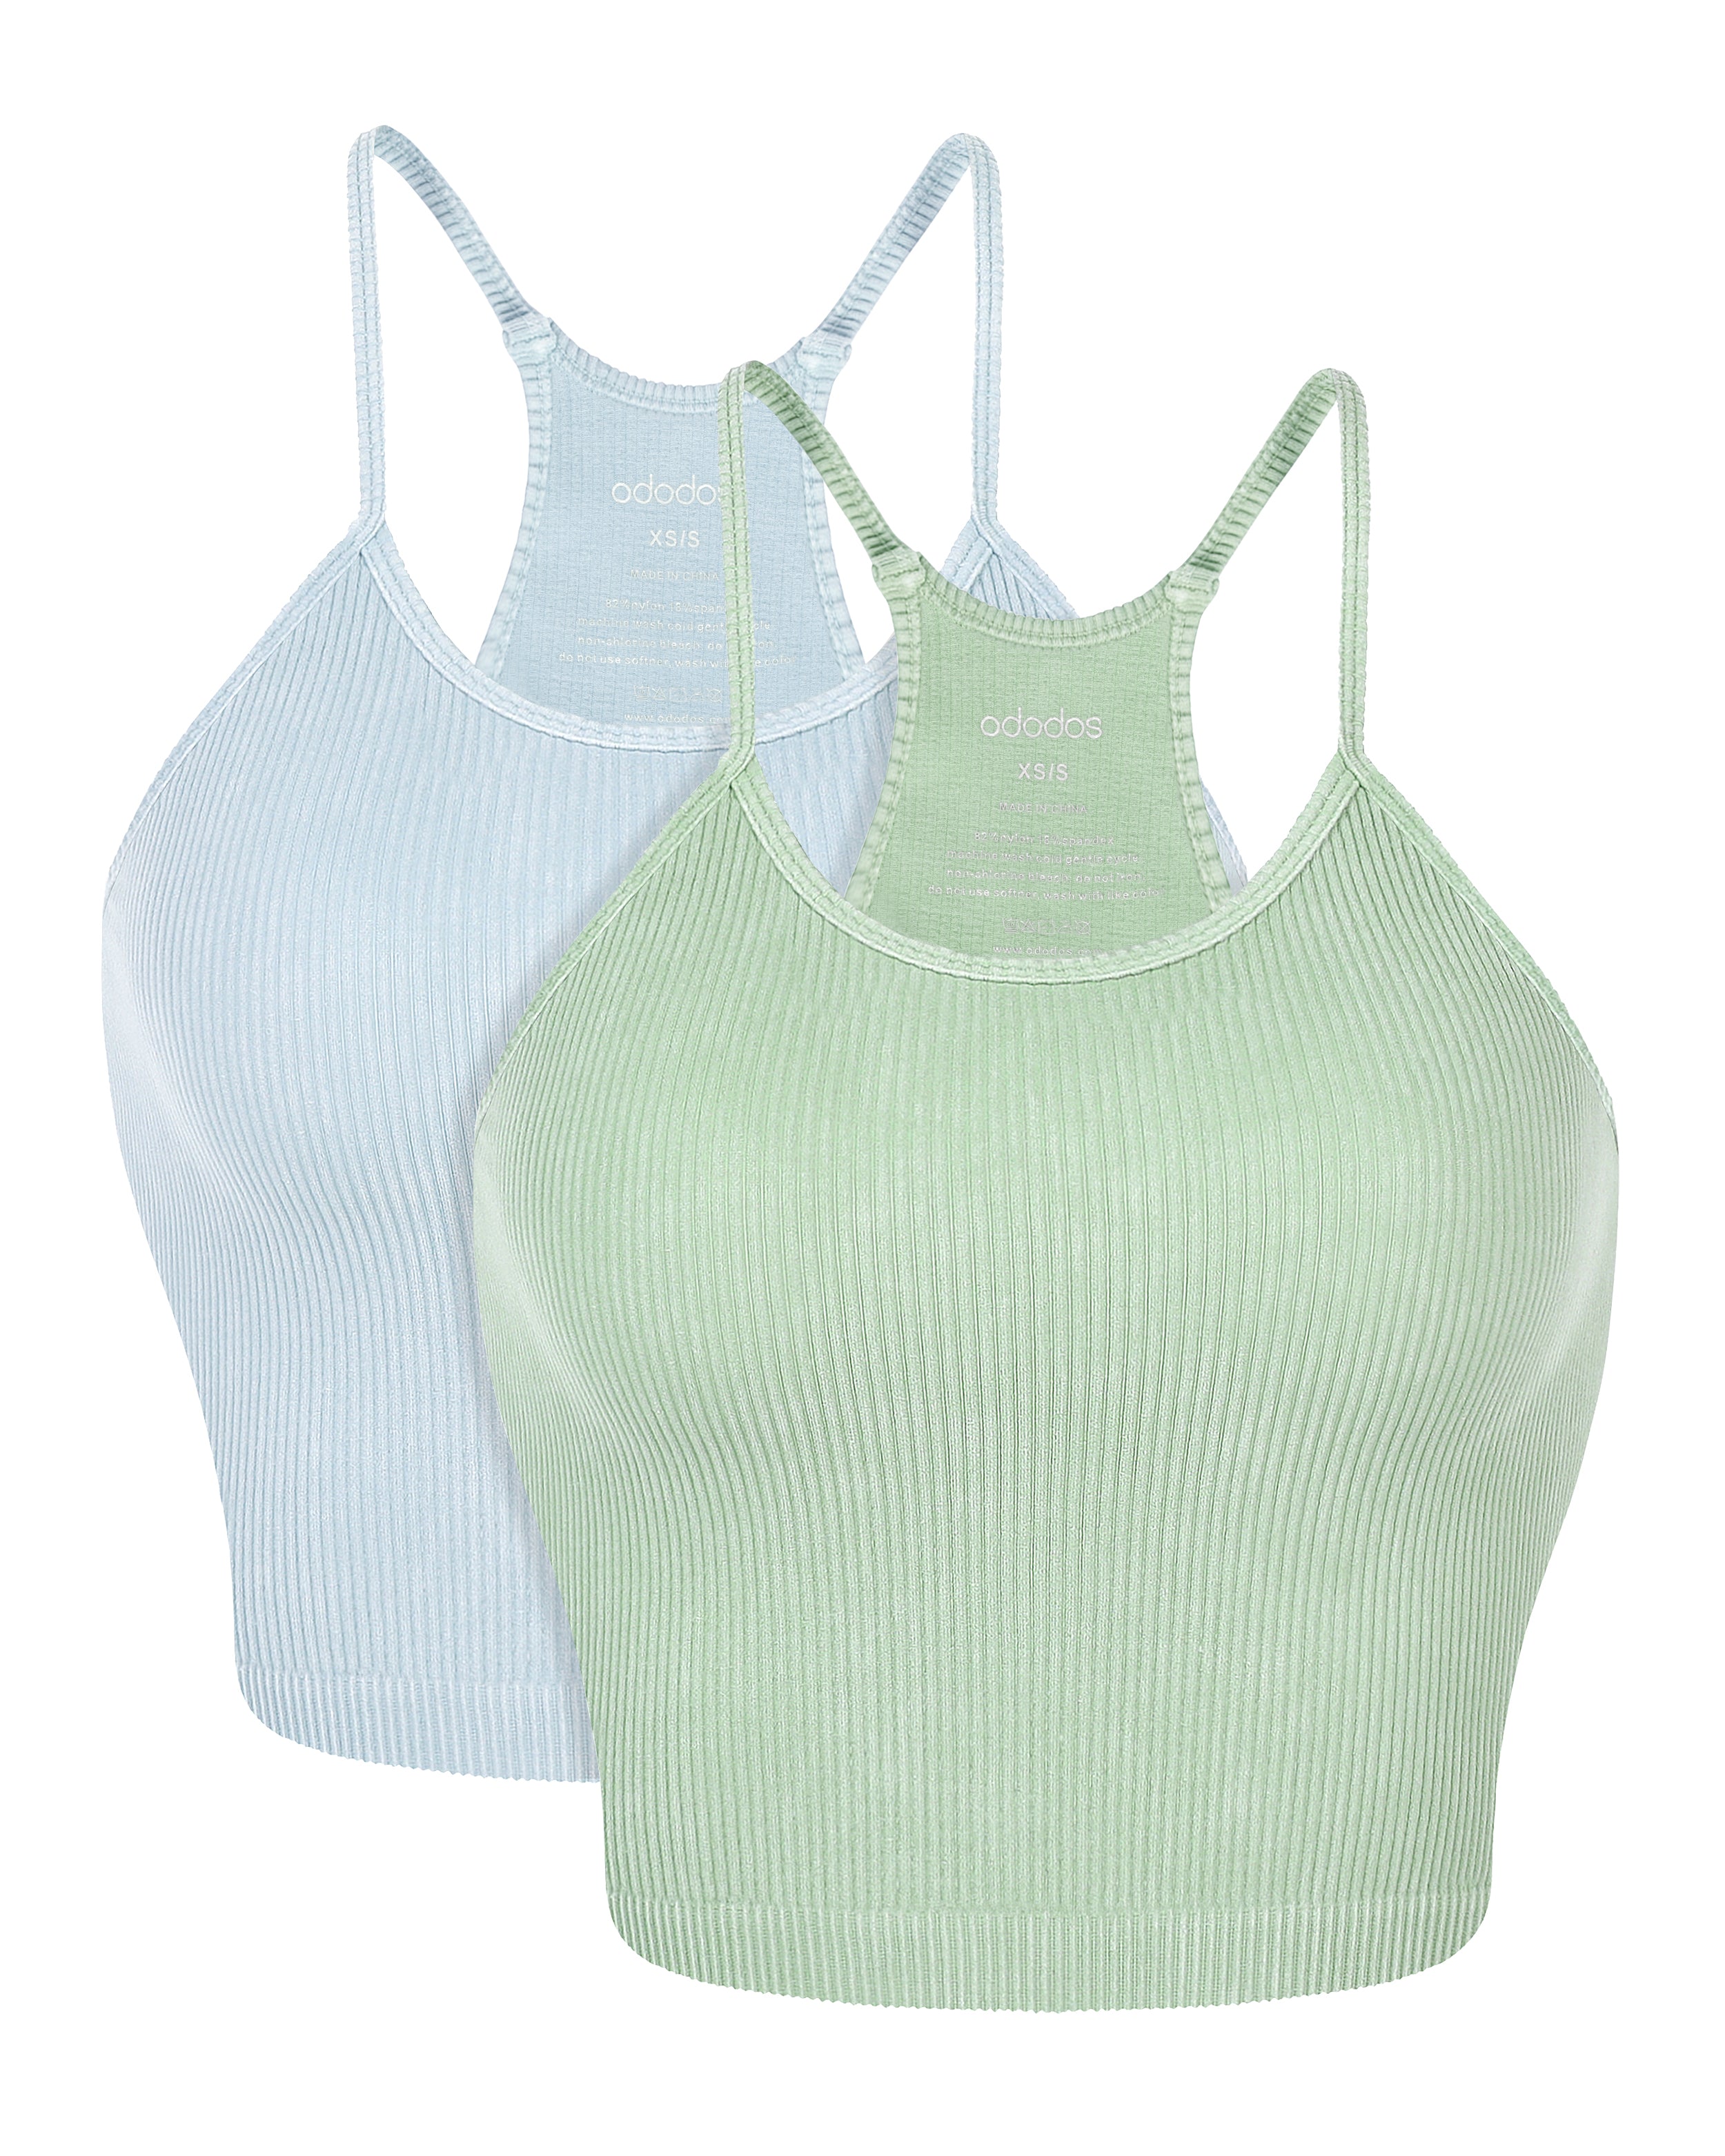 2-Pack Seamless Rib-Knit Camisole Light Green+Light Blue - ododos